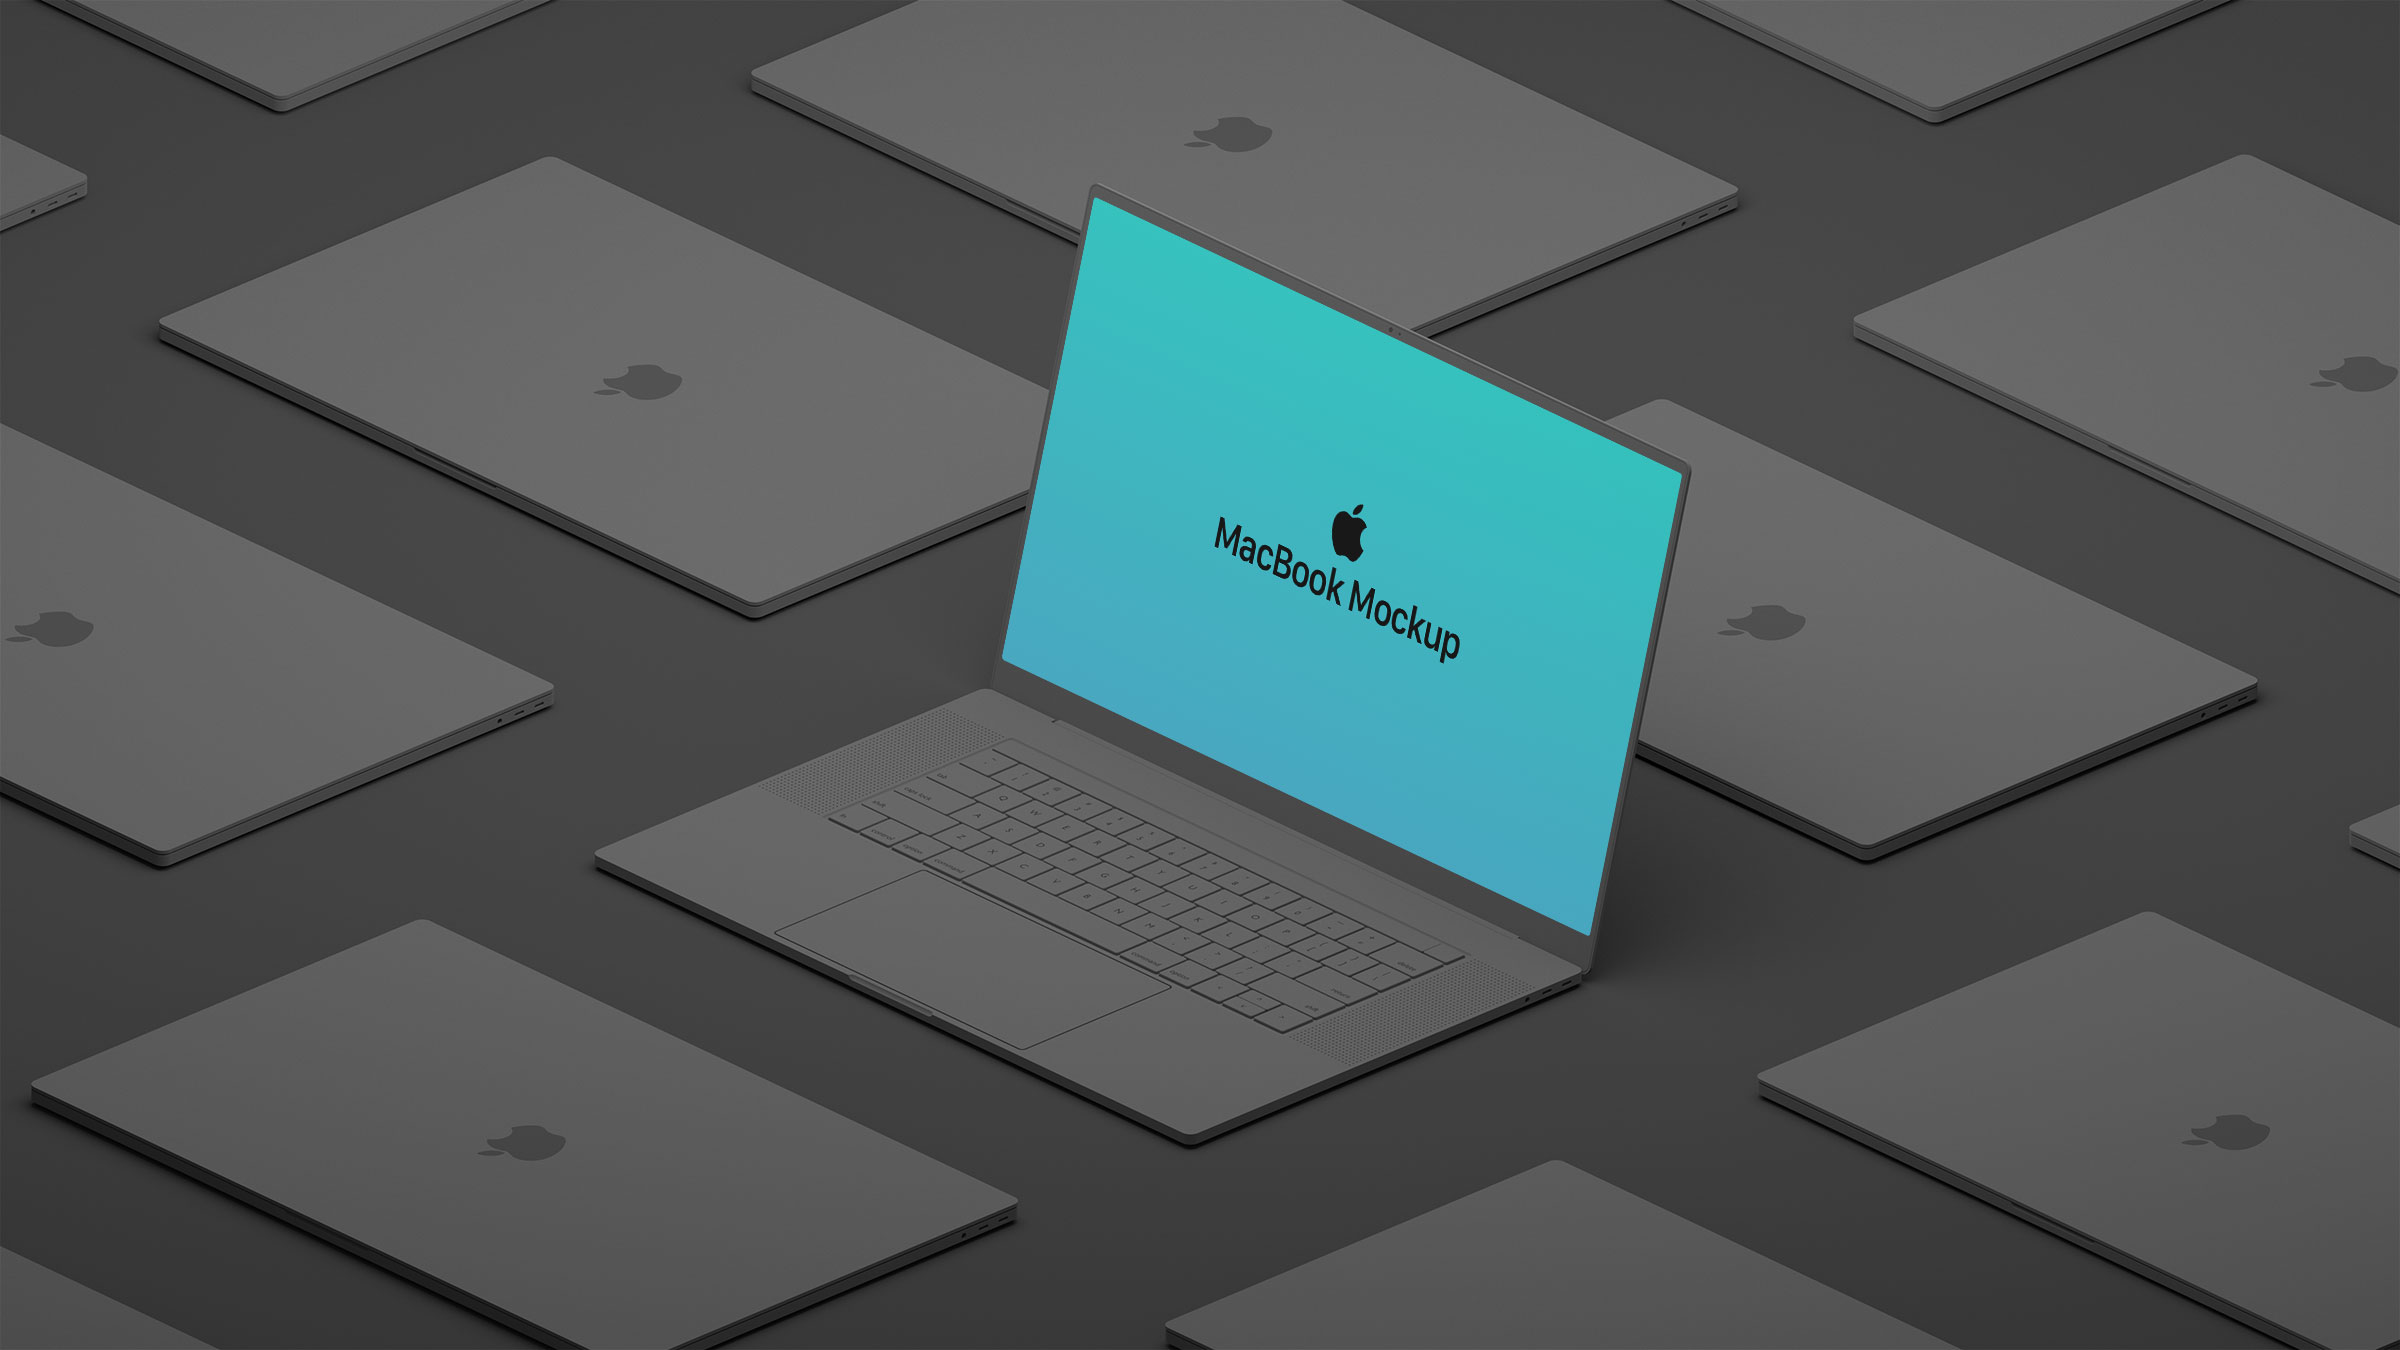 Free-Minimalistic-Macbook-Mockup-PSD-2